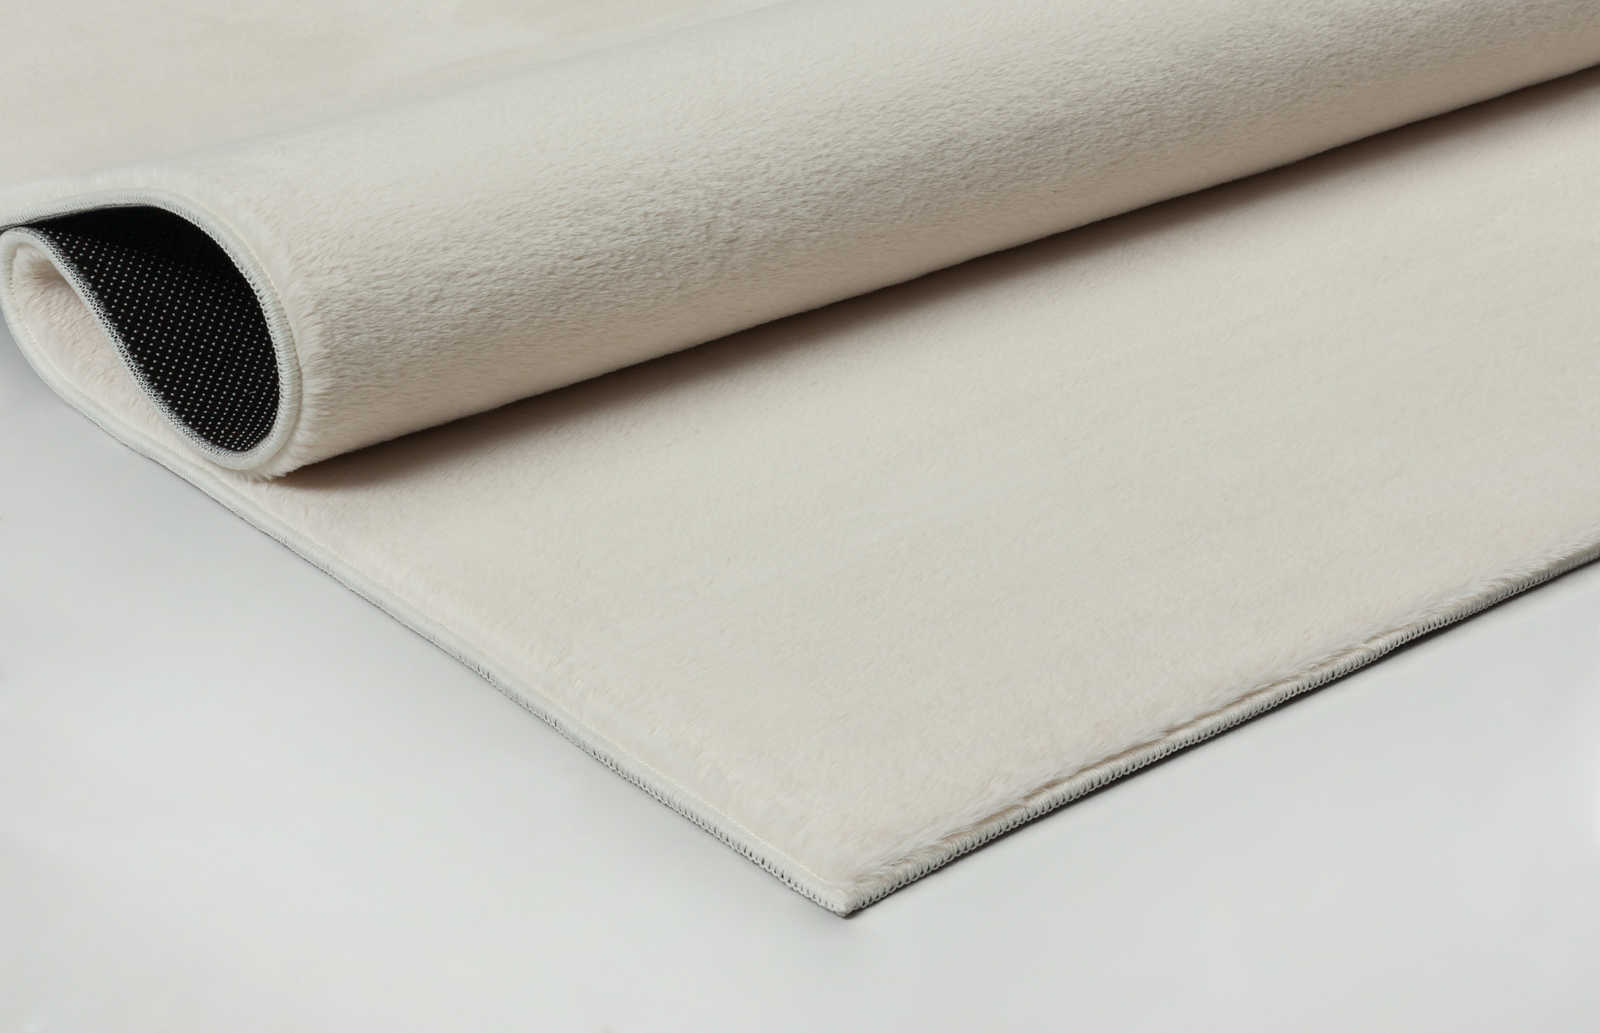             Soft high pile carpet in cream - 220 x 160 cm
        